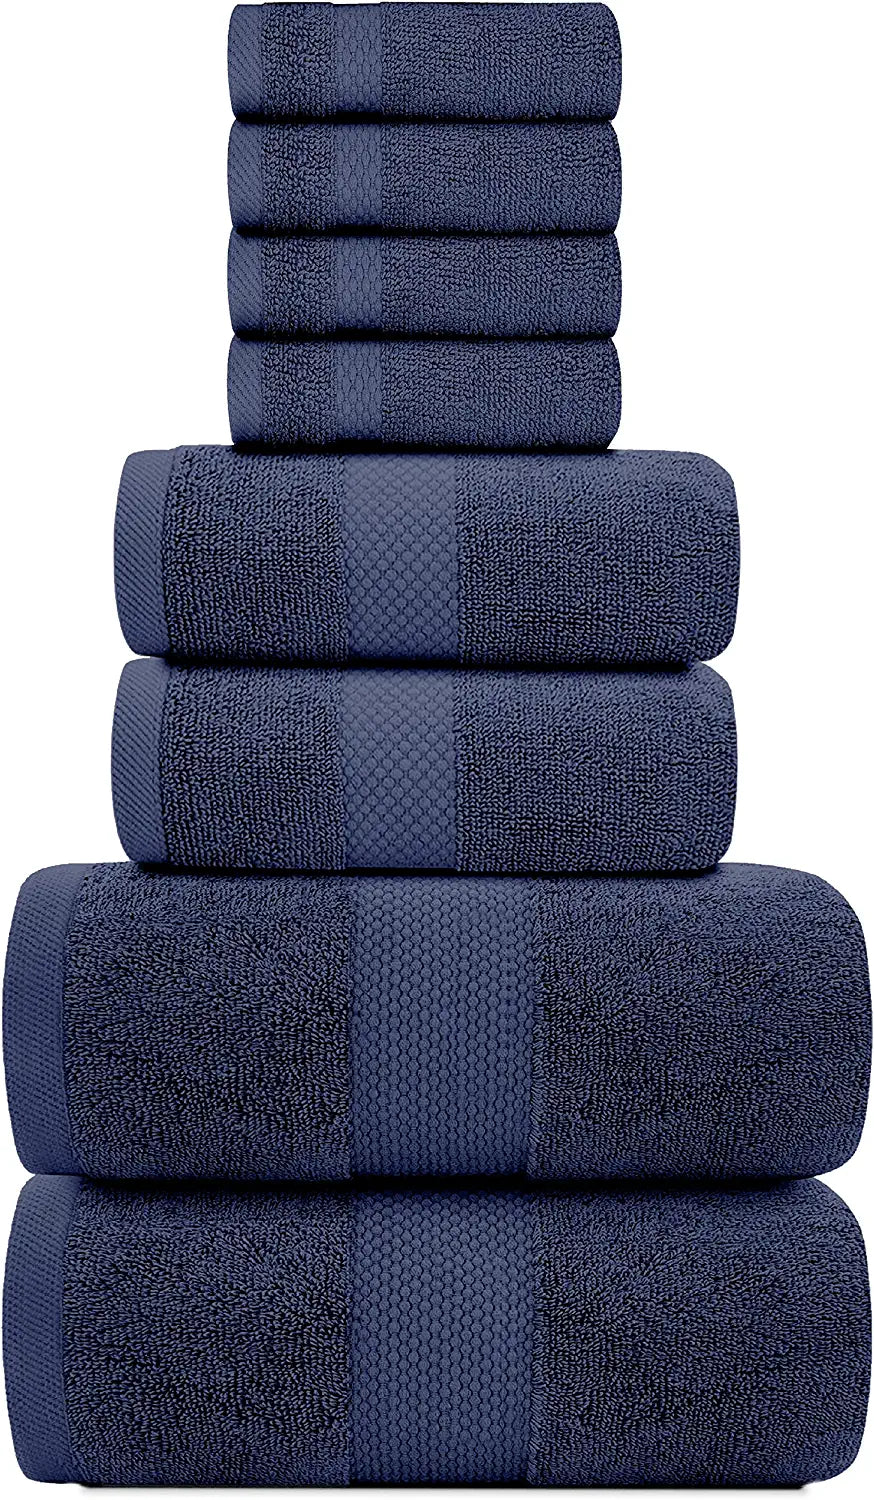 8Pc Navy Blue Towel Set